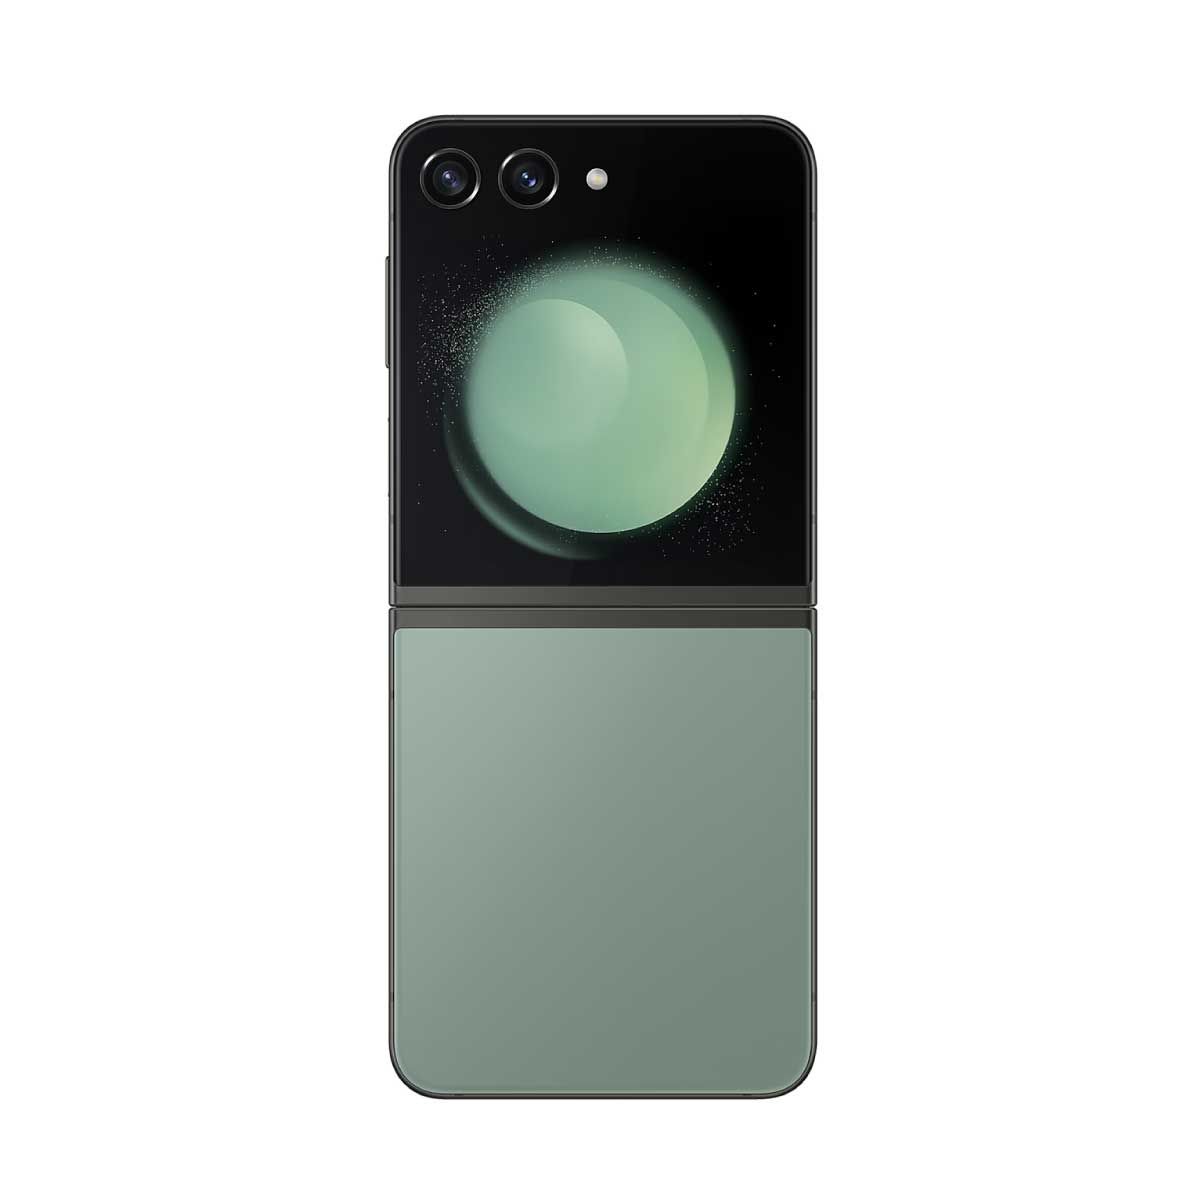 Samsung Galaxy Z Flip5  Green  สีพิเศษ   ( Ram 8 GB  256 GB )